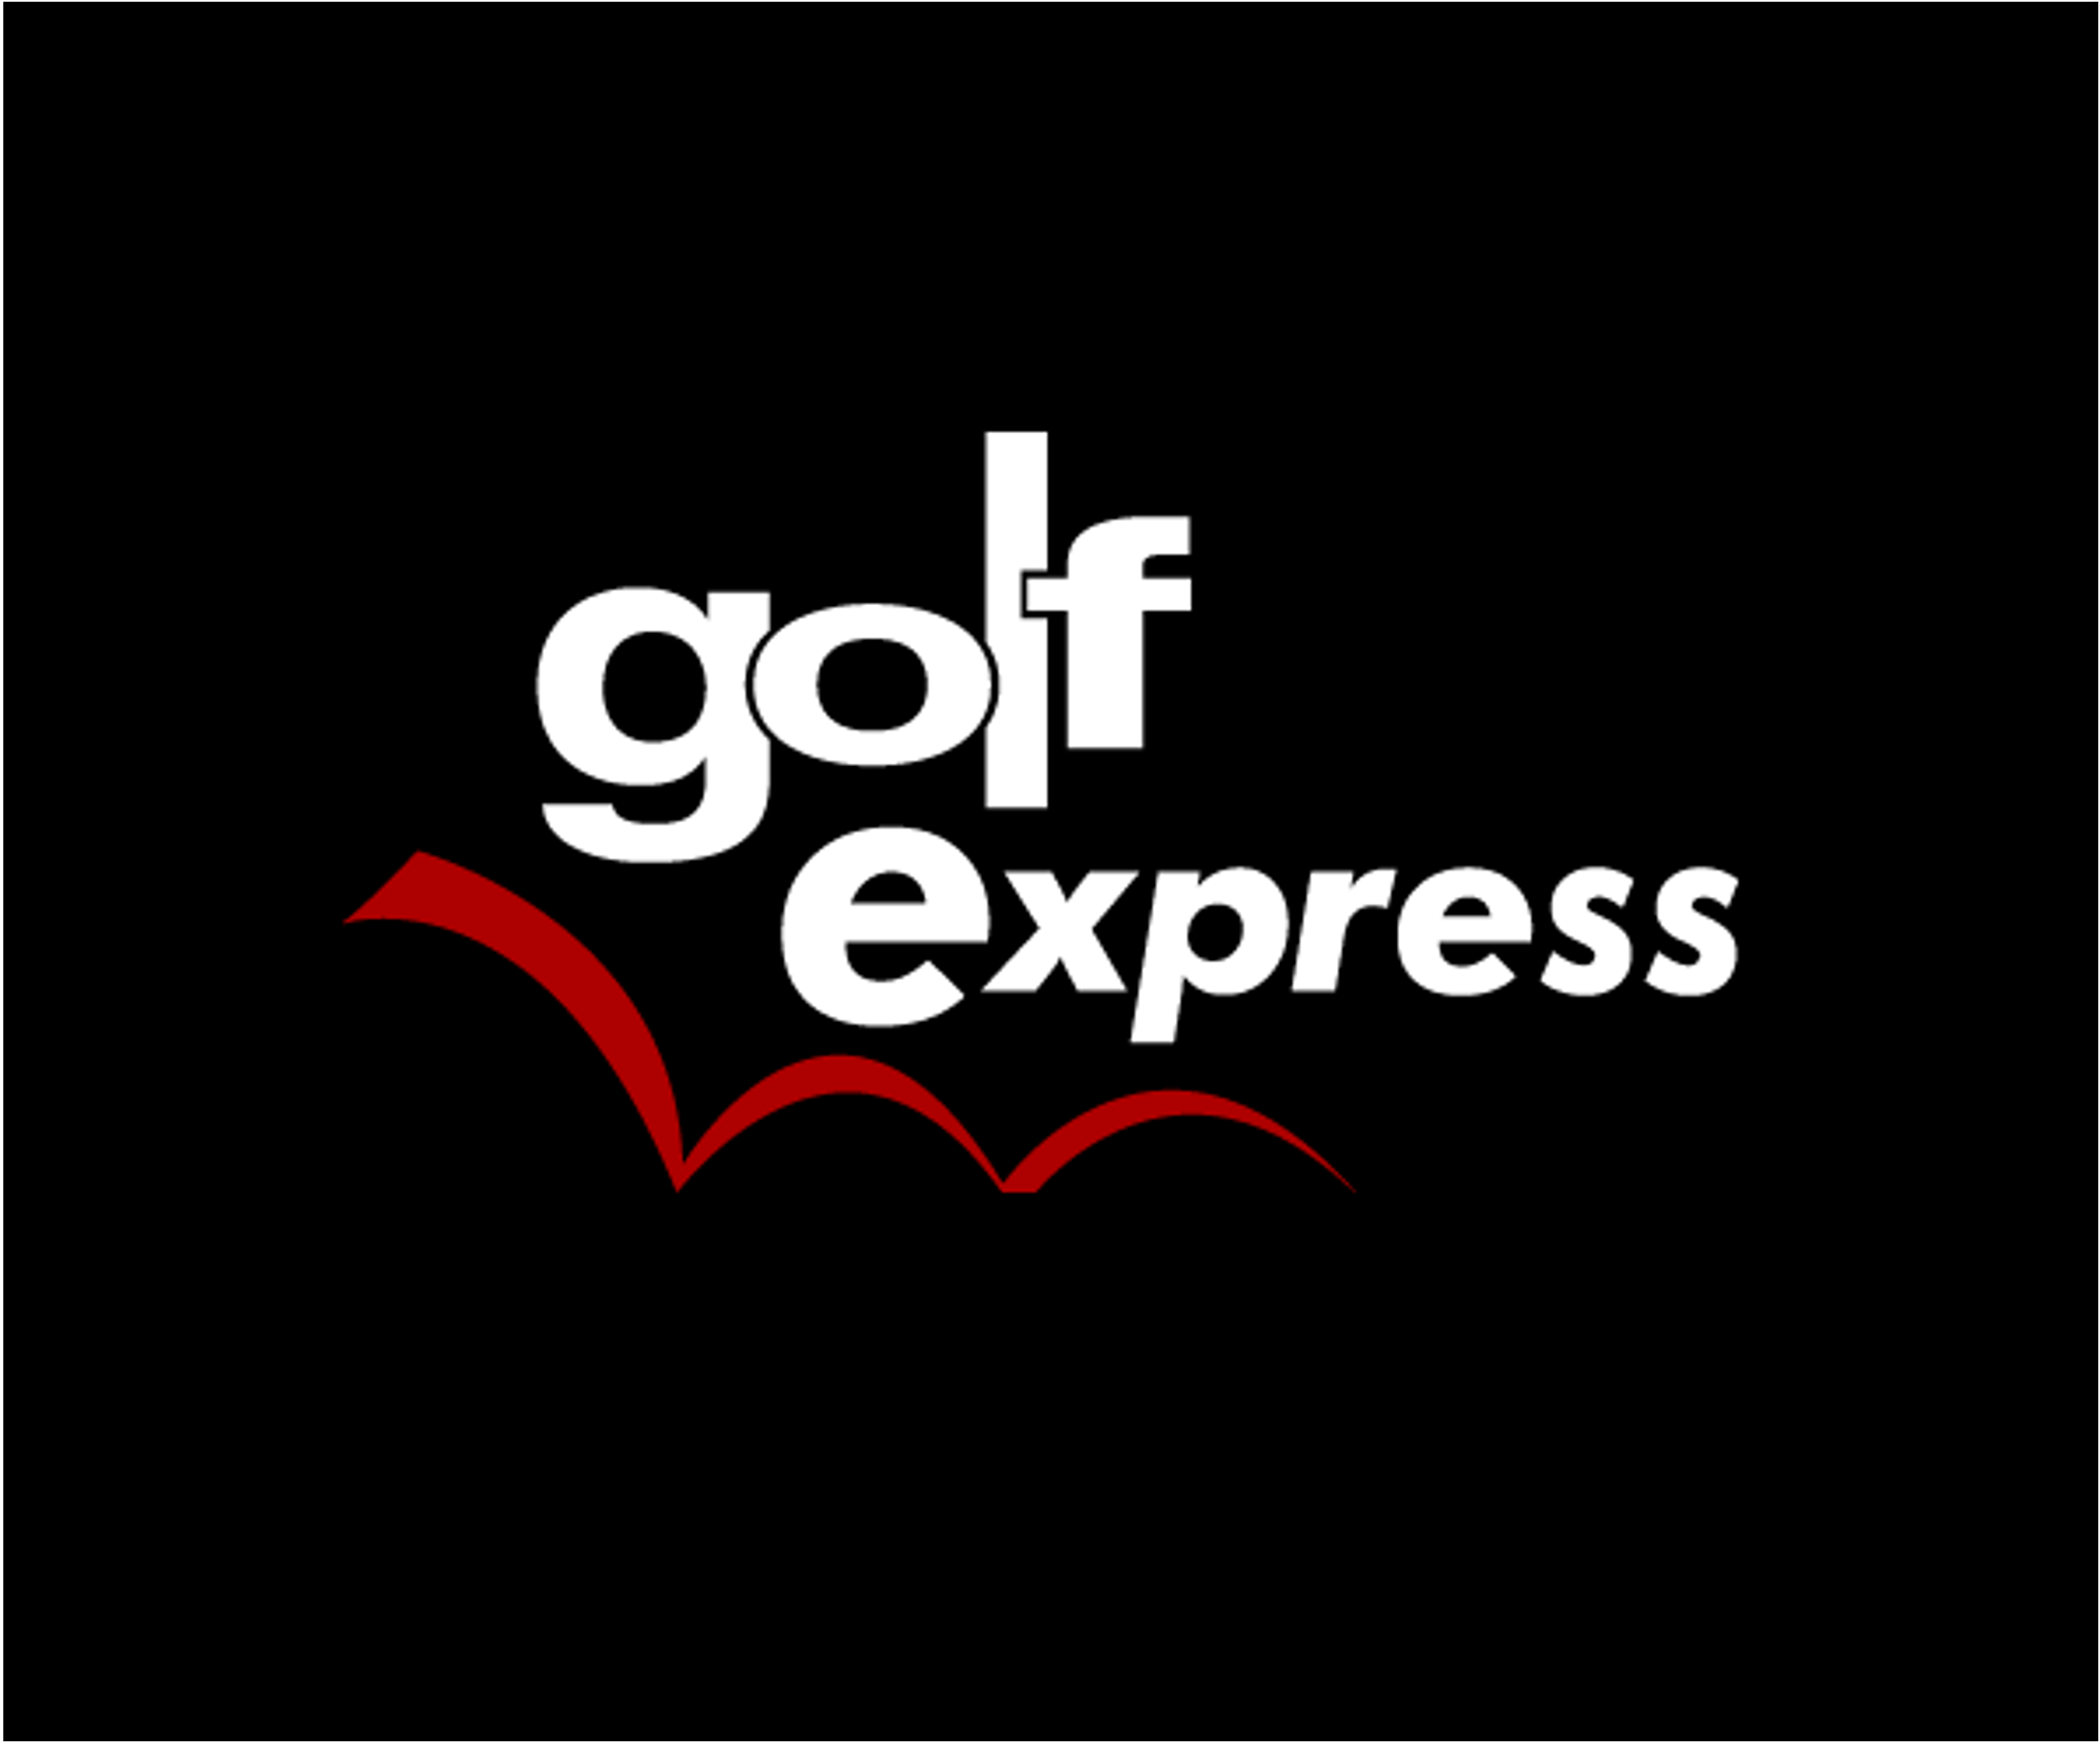 (c) Golfexpress.com